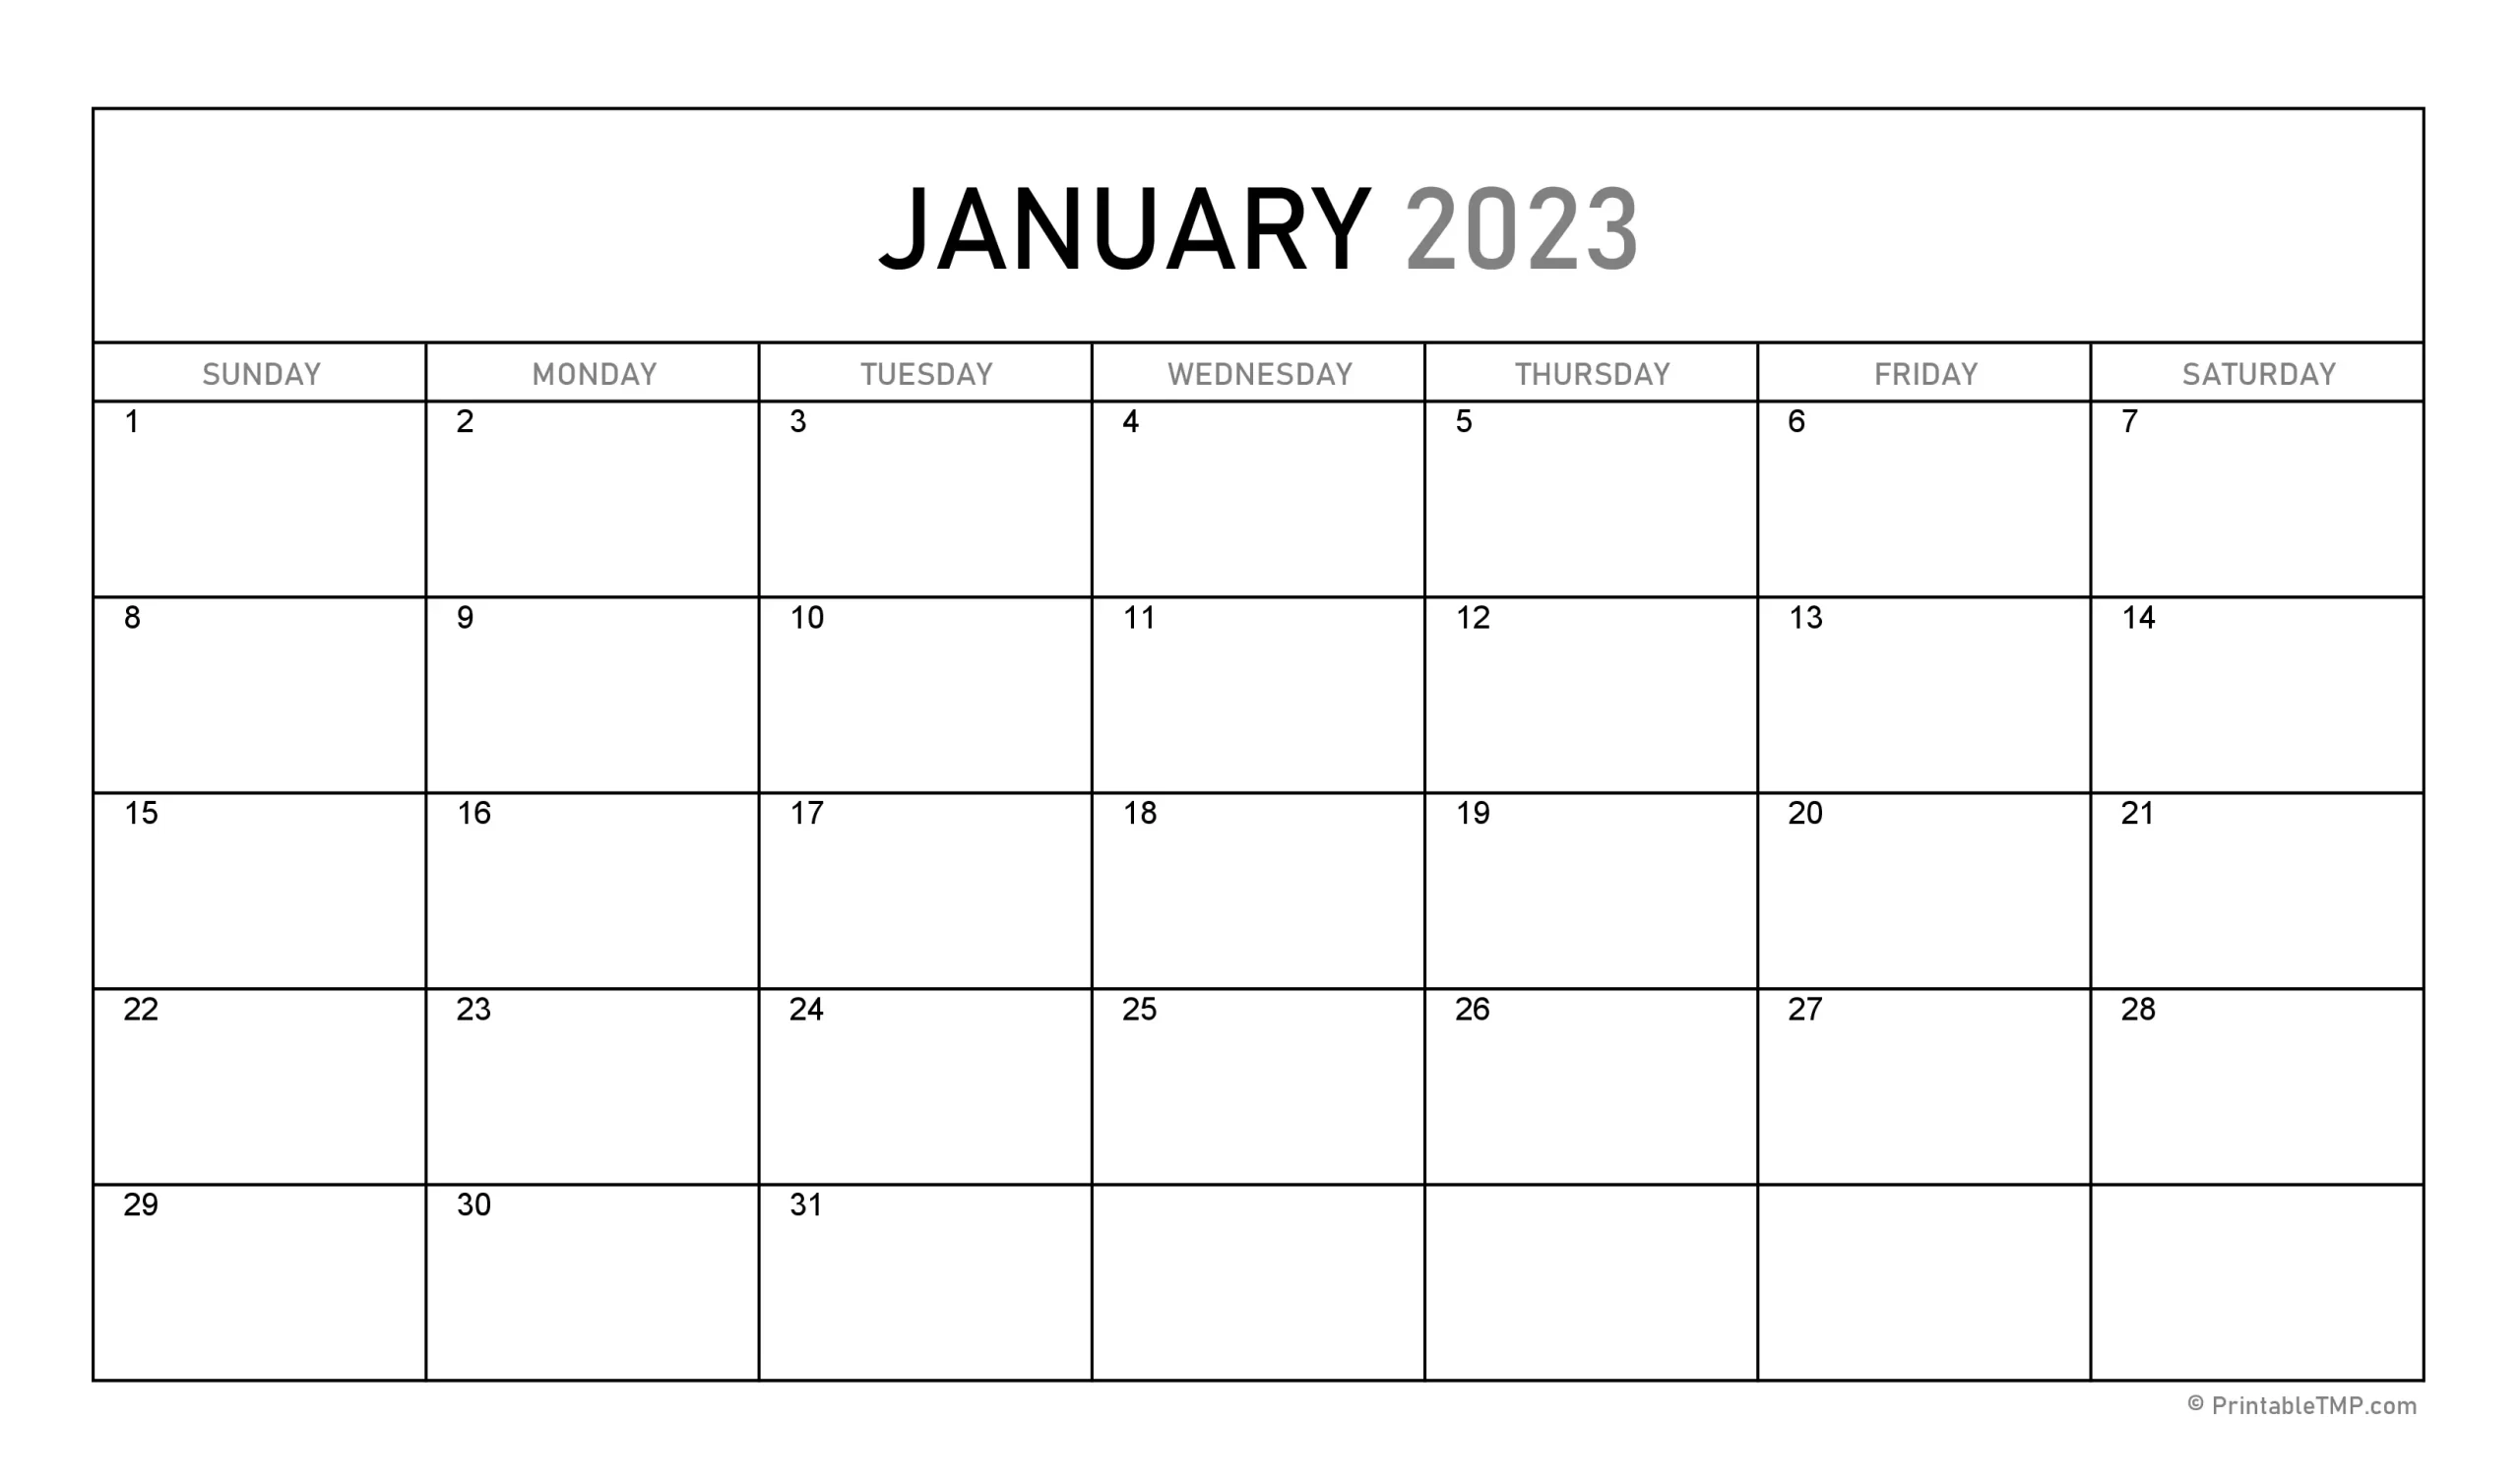 FREE Printable January 2023 Calendar Templates